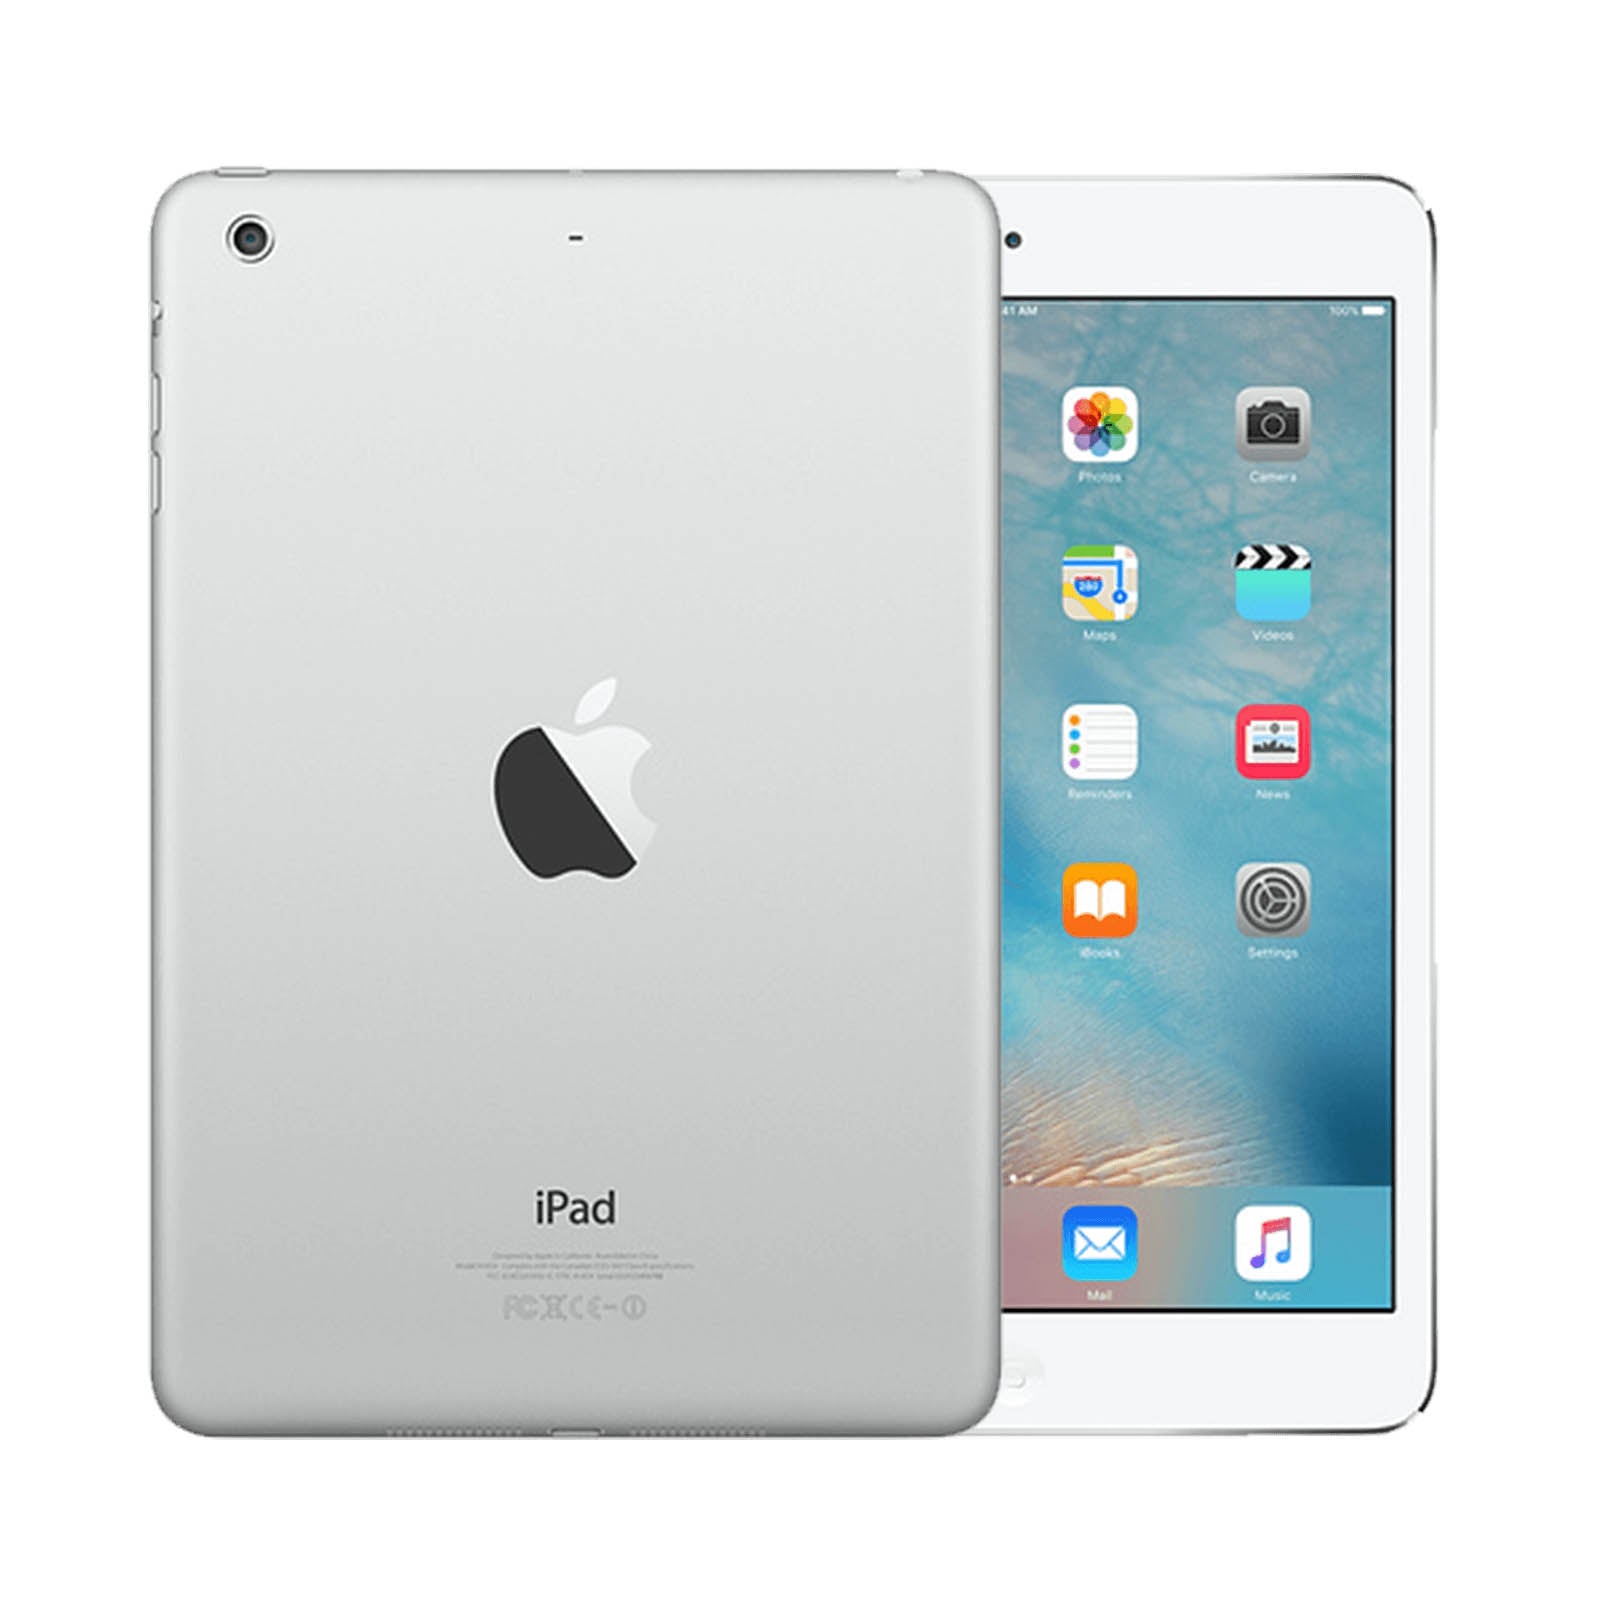 Apple iPad mini 2 32GB White Very Good - Unlocked